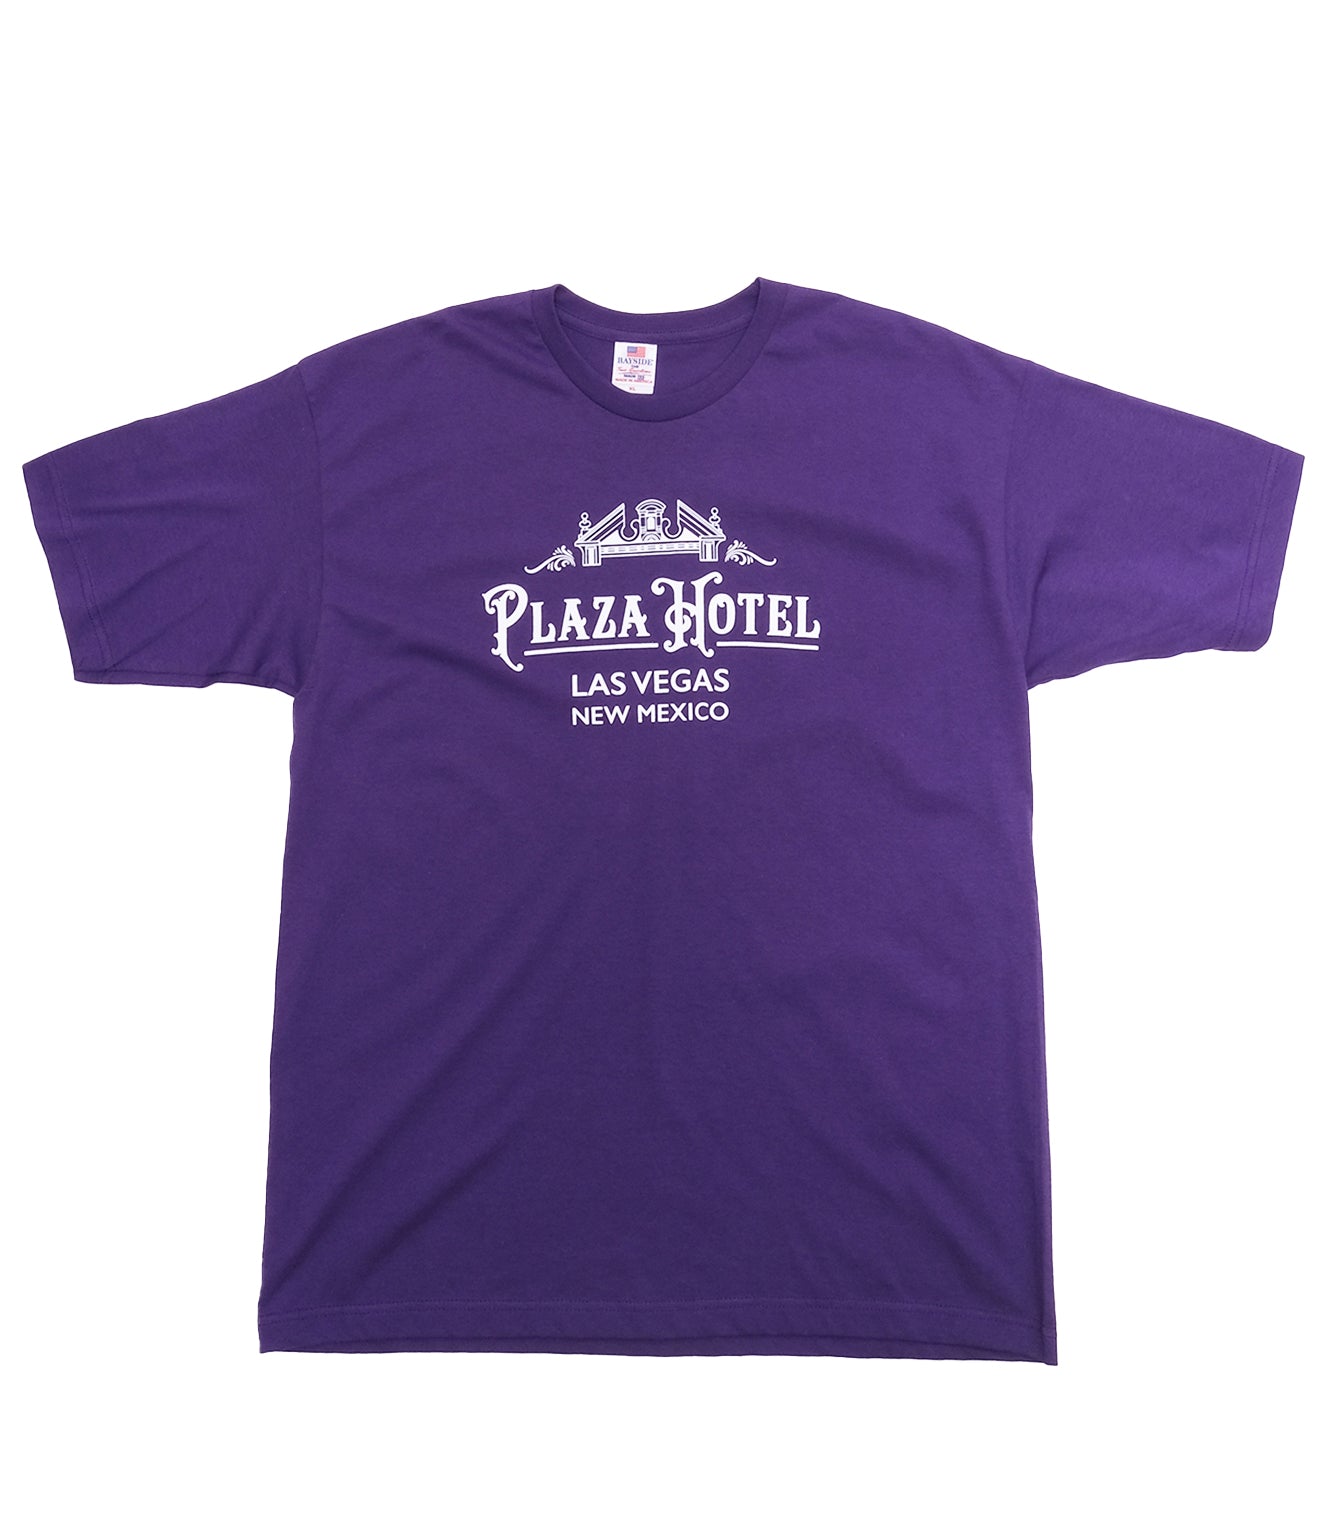 New mexico"PLAZA HOTEL  Souvenir Tee" (Purple)